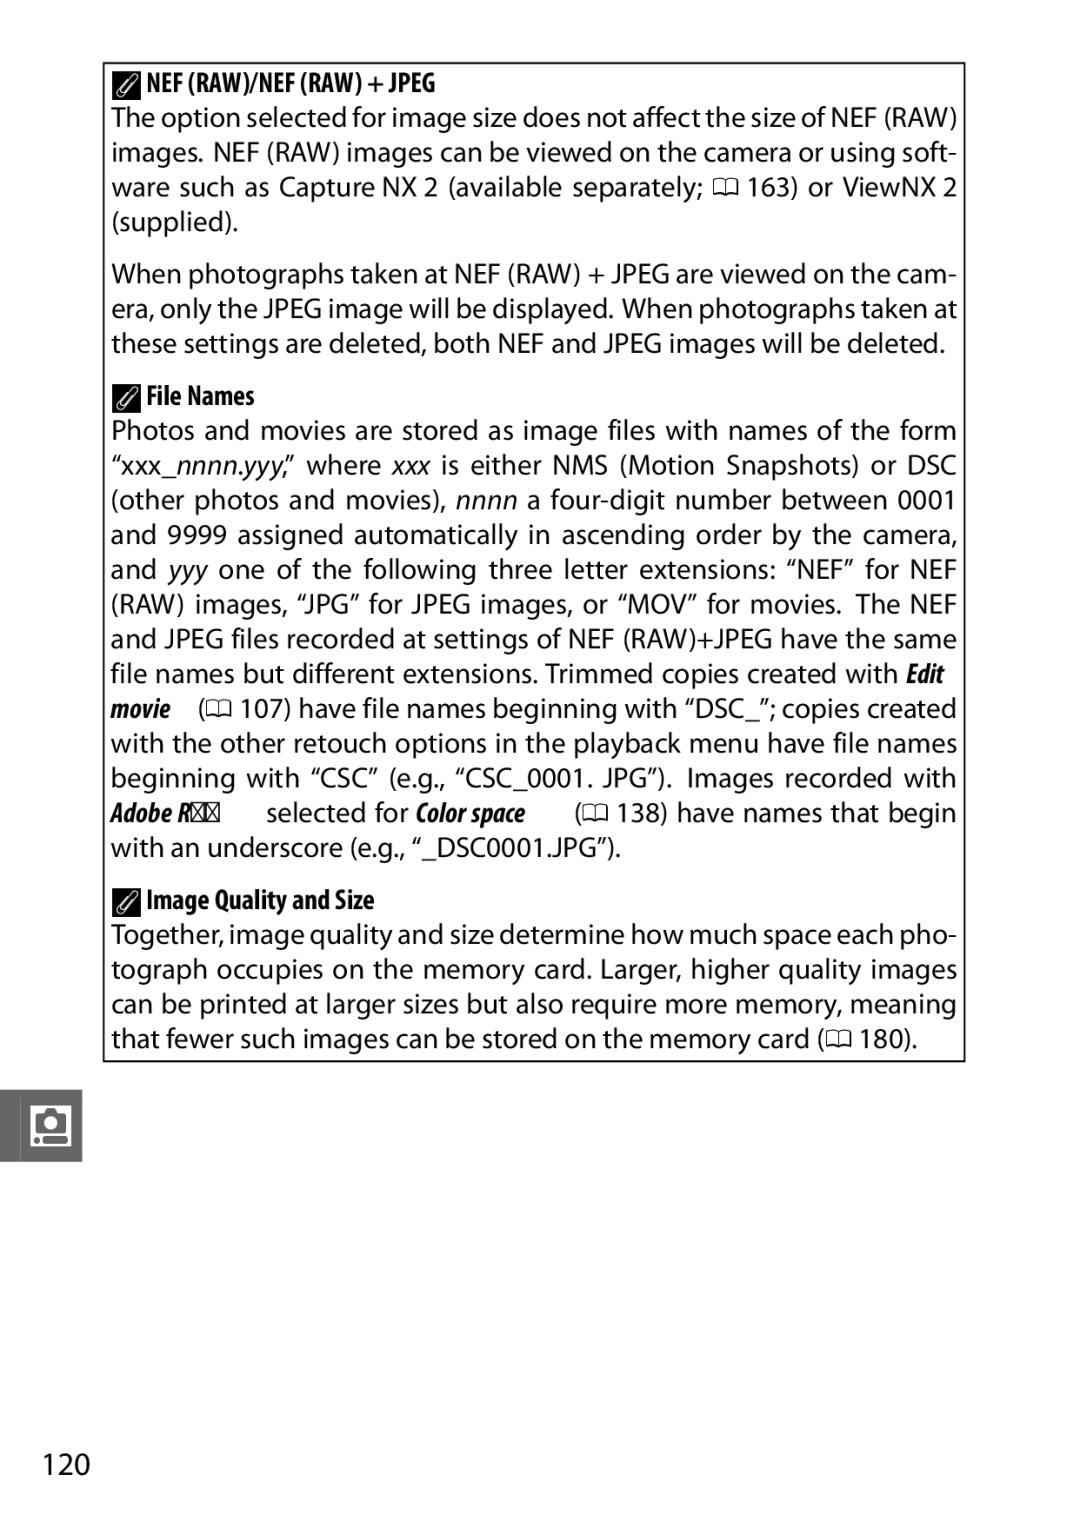 Nikon V1 manual 120, AFile Names, AImage Quality and Size 